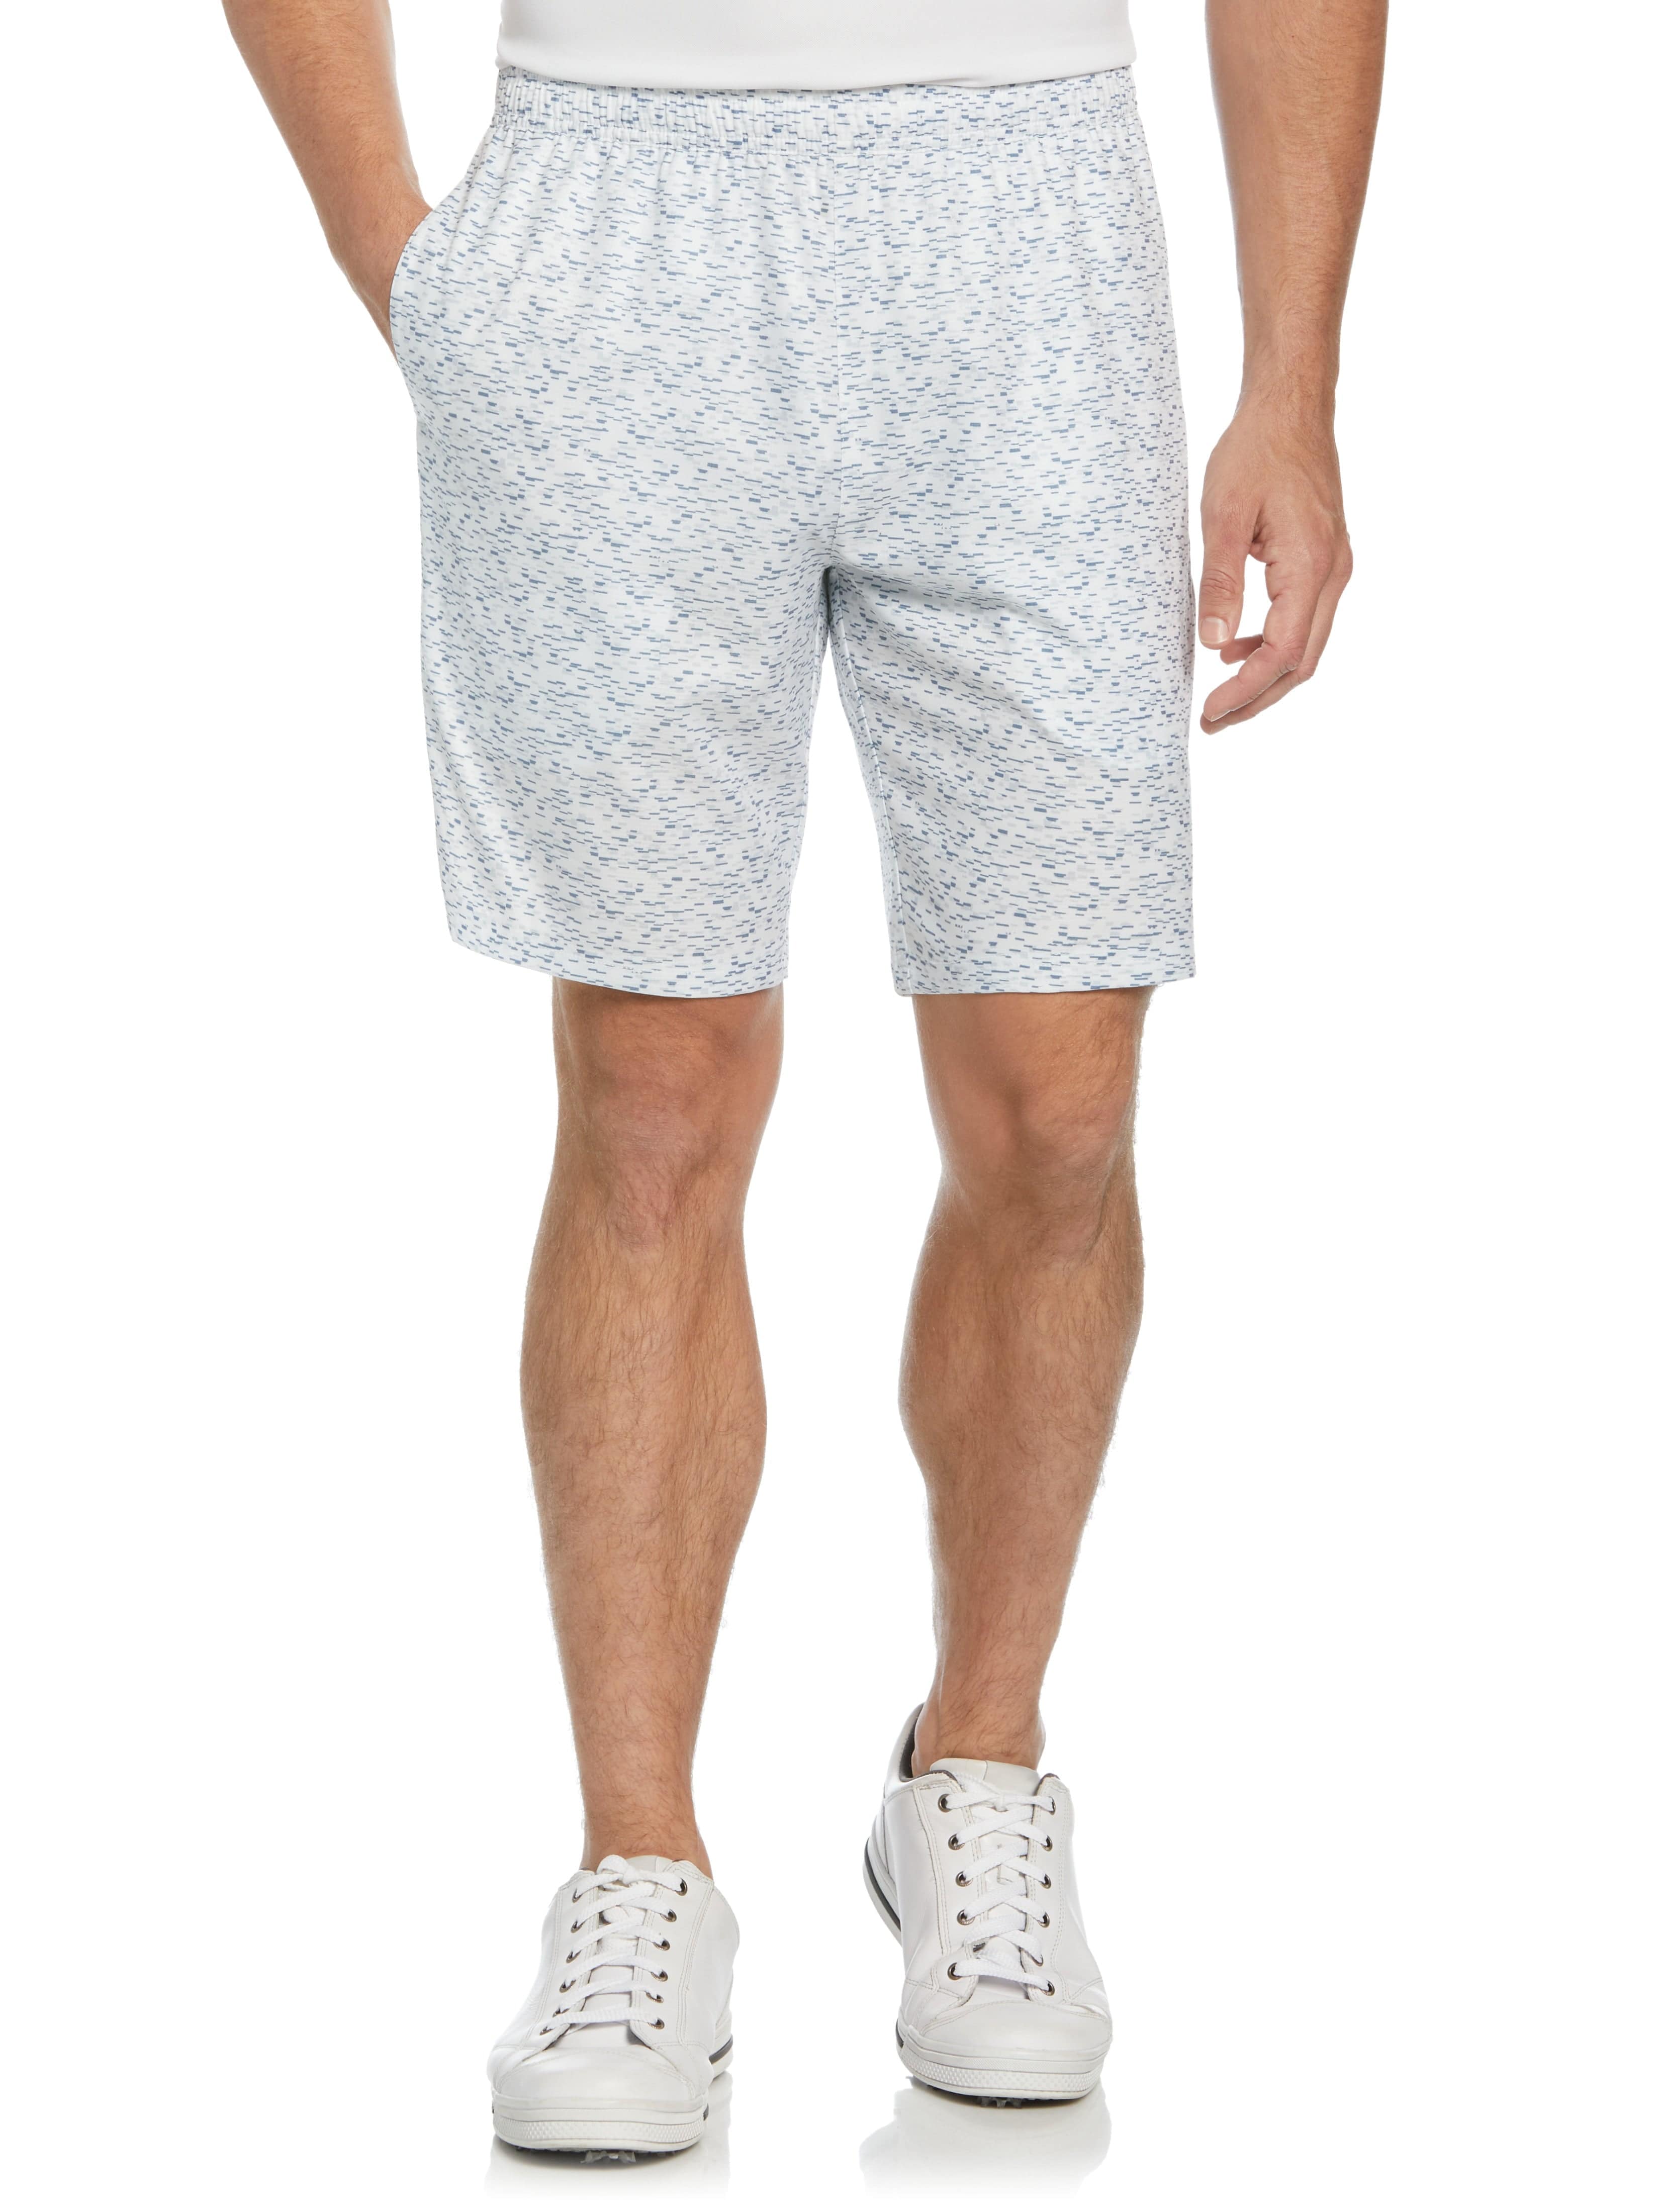 Grand Slam Mens Athletic Printed Tennis Short, Size Medium, White, Polyester/Elastane | Golf Apparel Shop